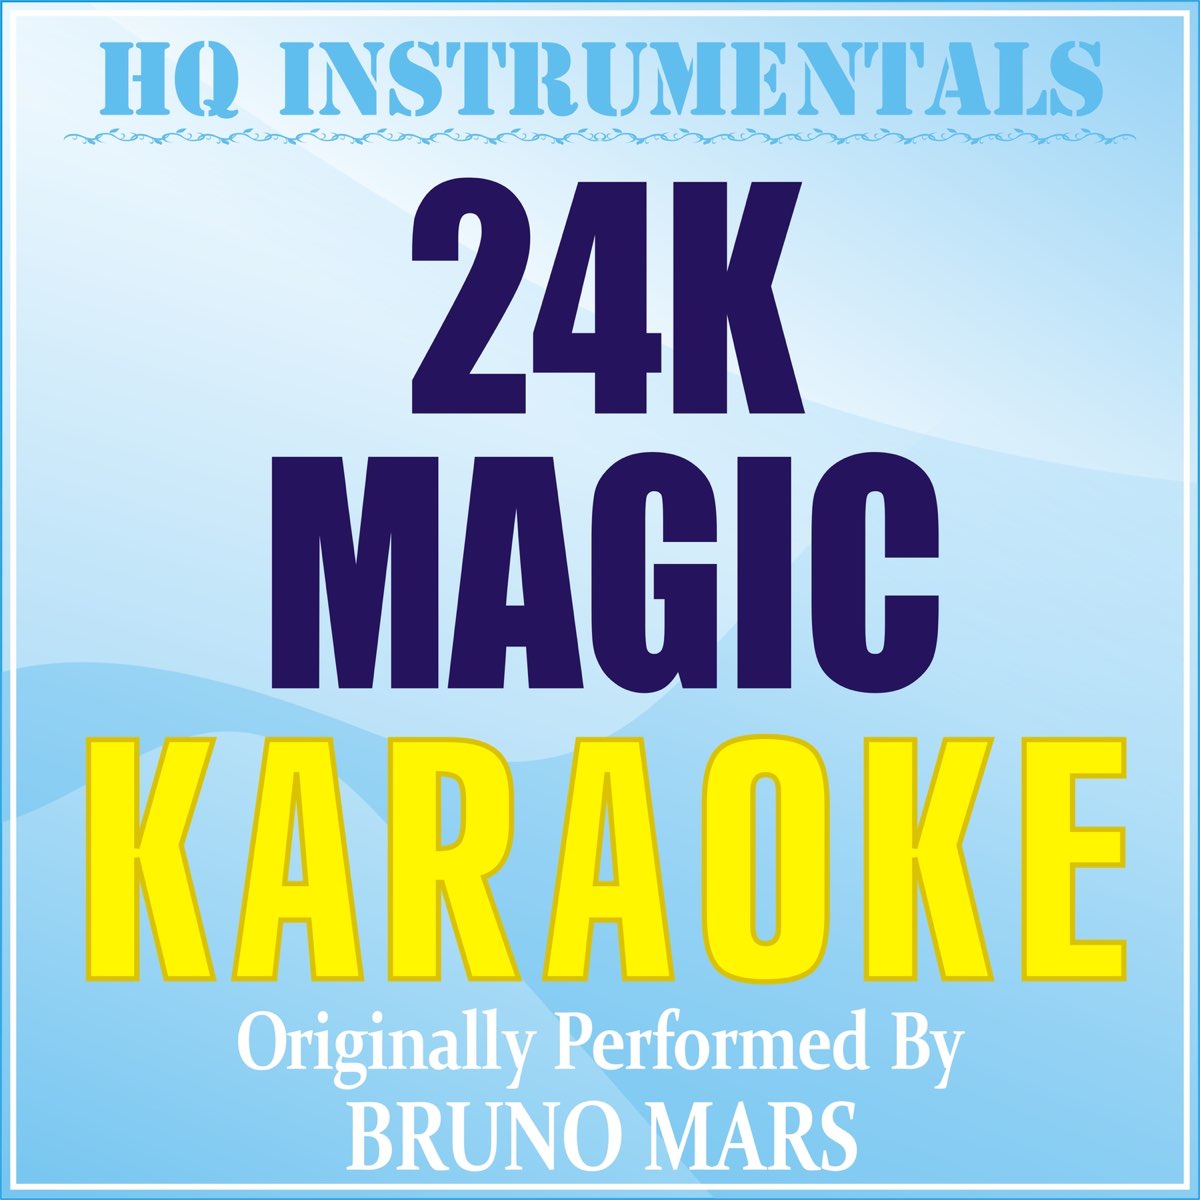 24K Magic (Karaoke Instrumental) [Originally Performed by Bruno Mars] -  Single by HQ INSTRUMENTALS on Apple Music